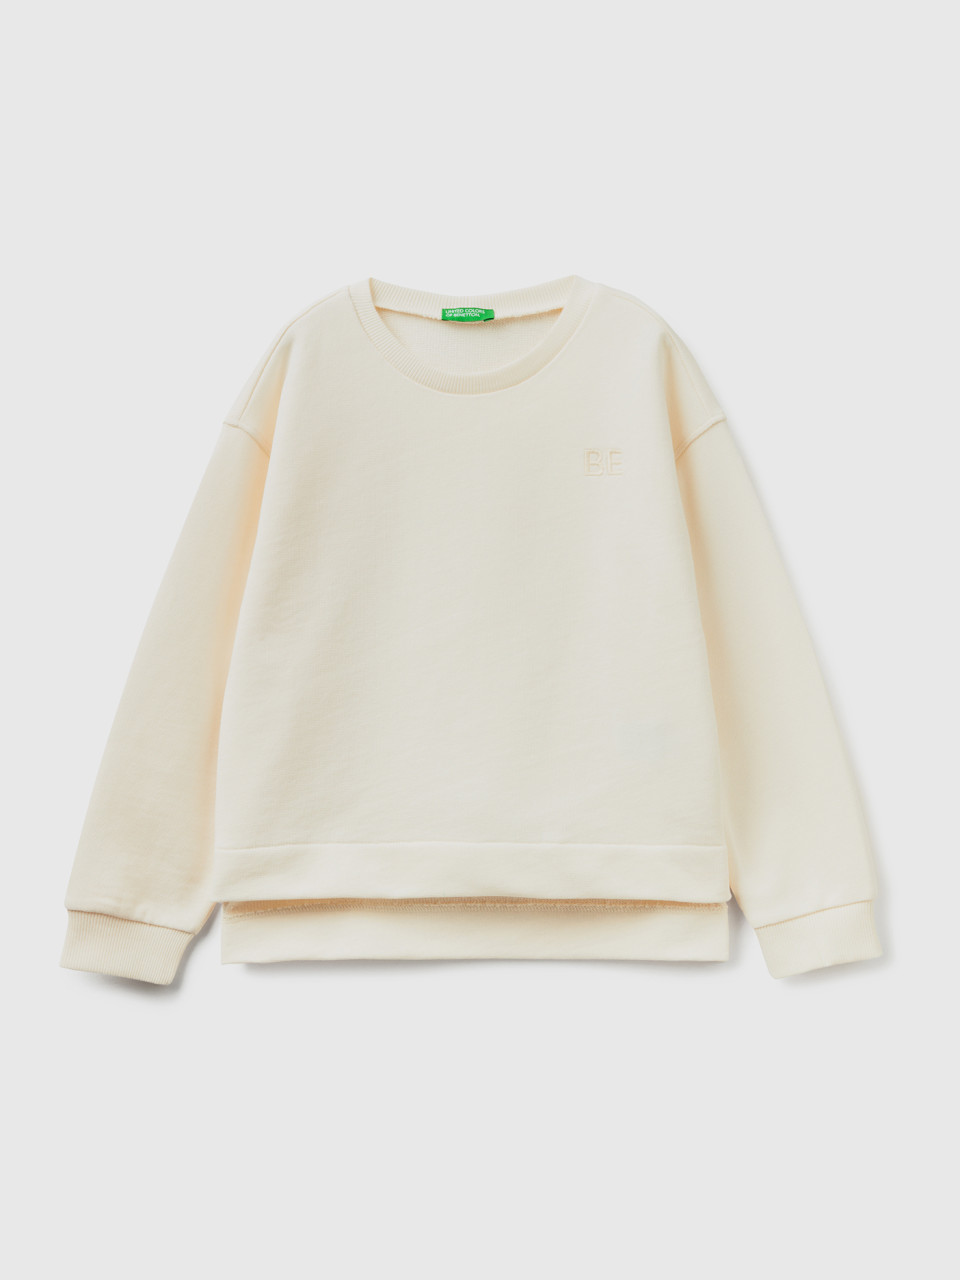 Benetton, Sweatshirt With be Embroidery, Creamy White, Kids